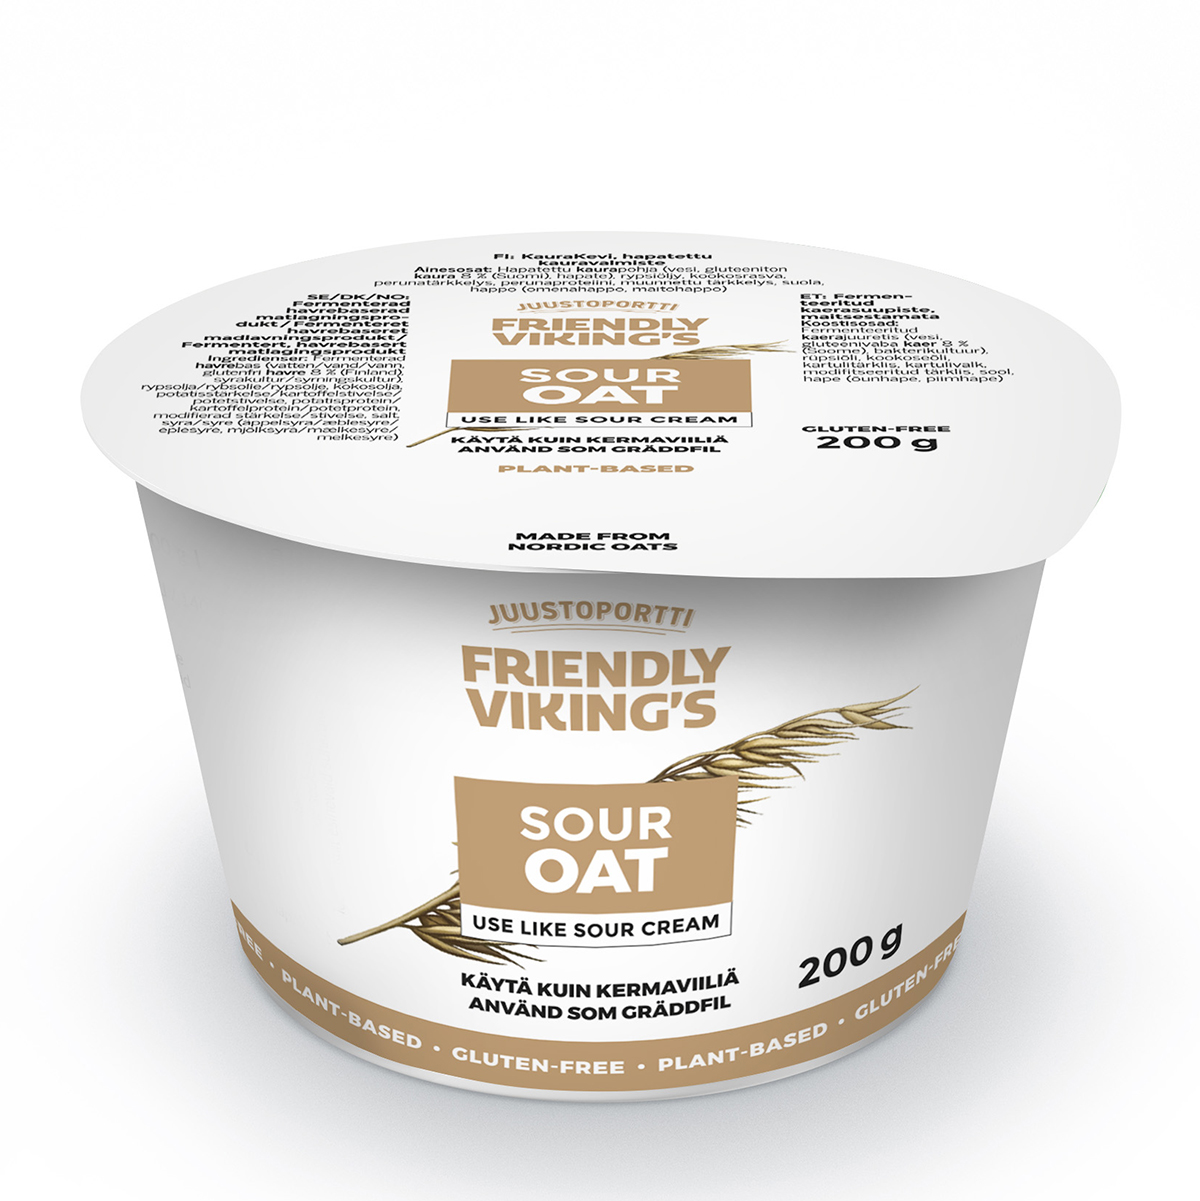 Juustoportti Friendly Viking's Sour Oat 200 g